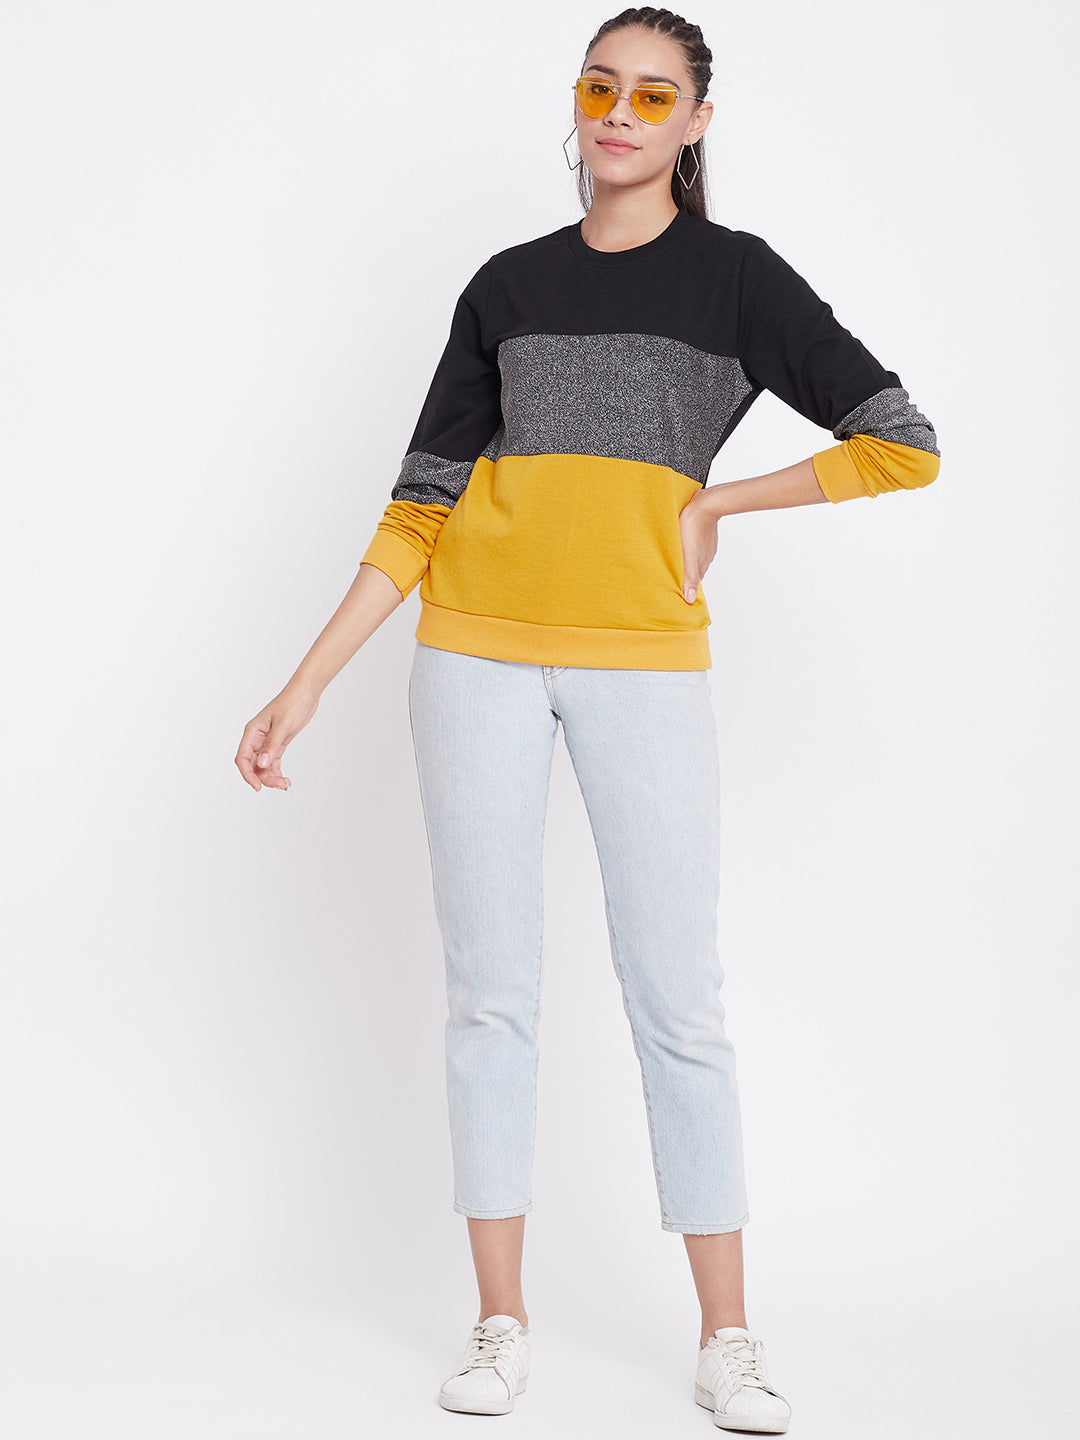 Austin Wood Women's Mustard Full Sleeves Round Neck Colorblocked Sweatshirt